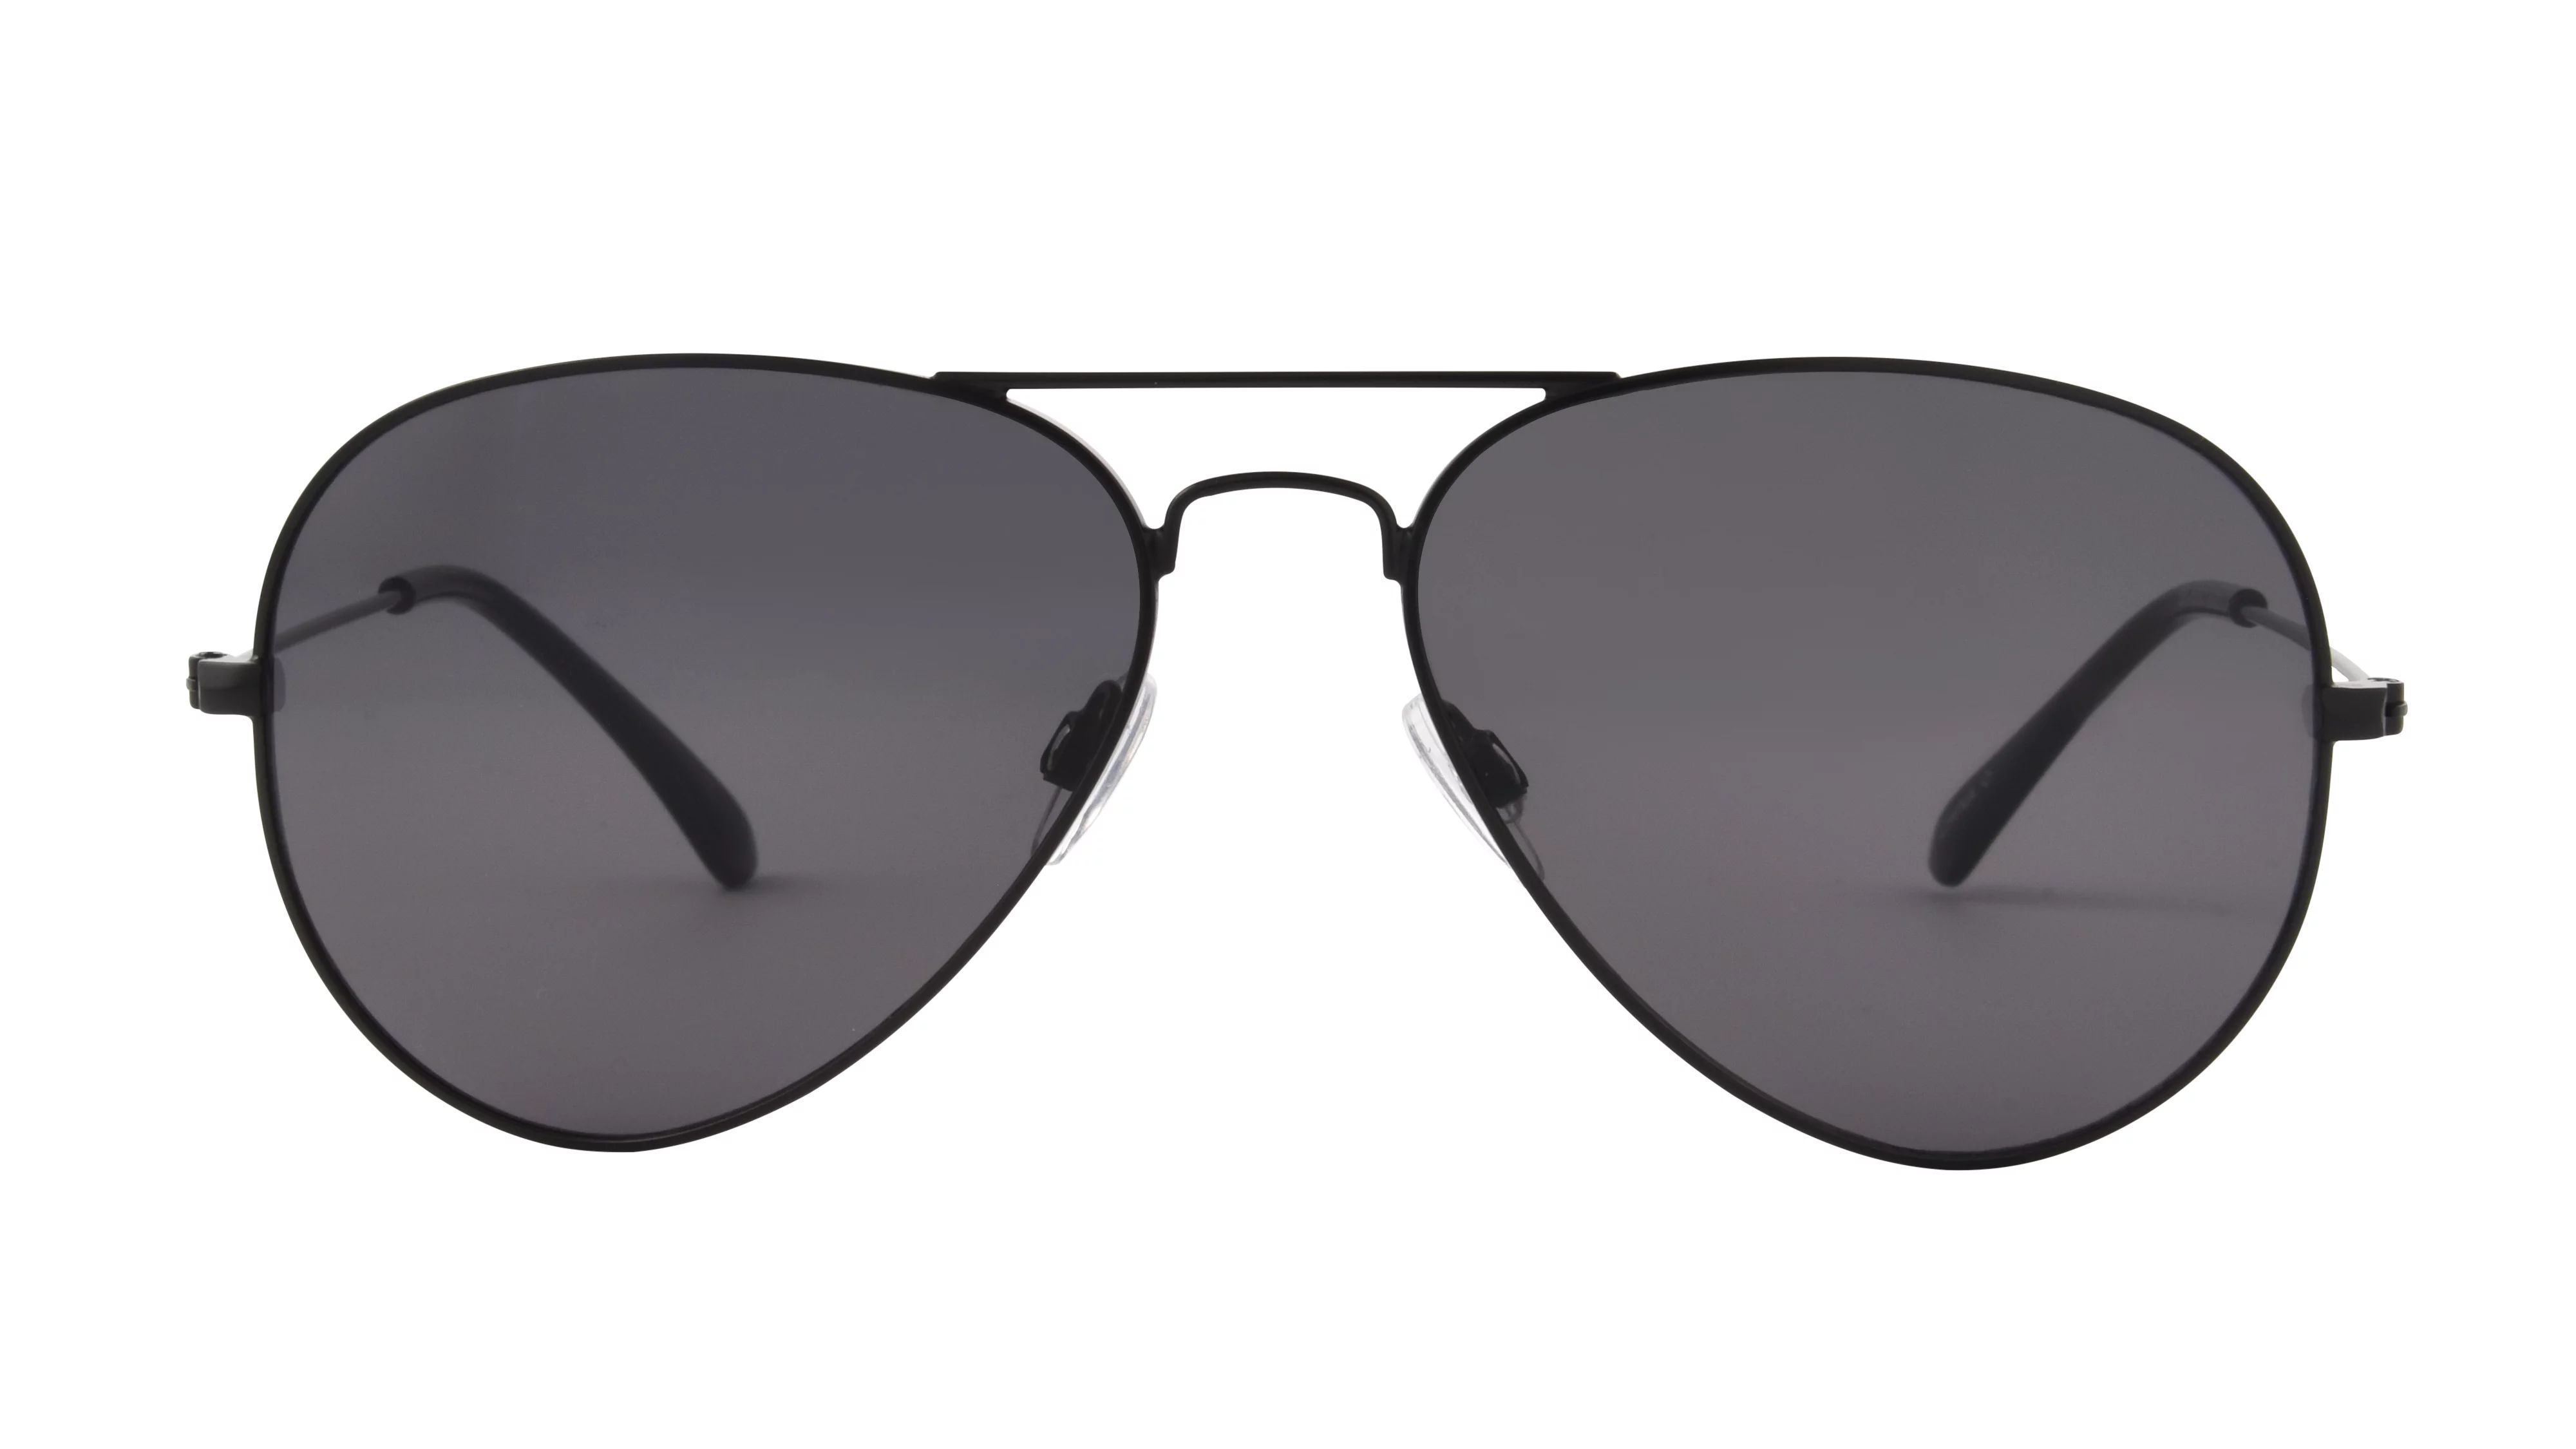 Sunsentials by Foster Grant Women's Aviator Sunglasses, Black | Walmart (US)